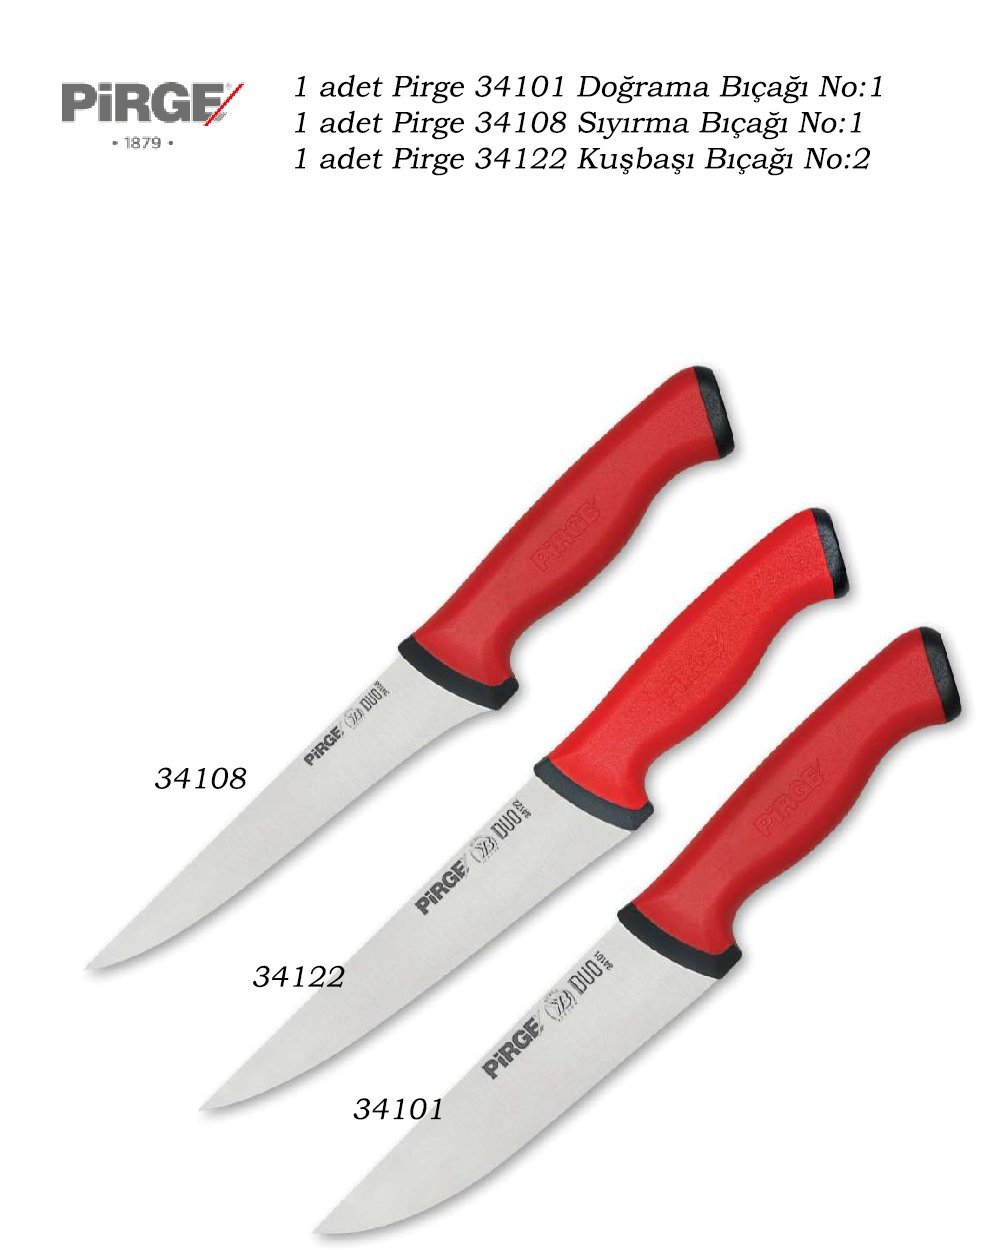 Pirge Kurban Bıçak Seti